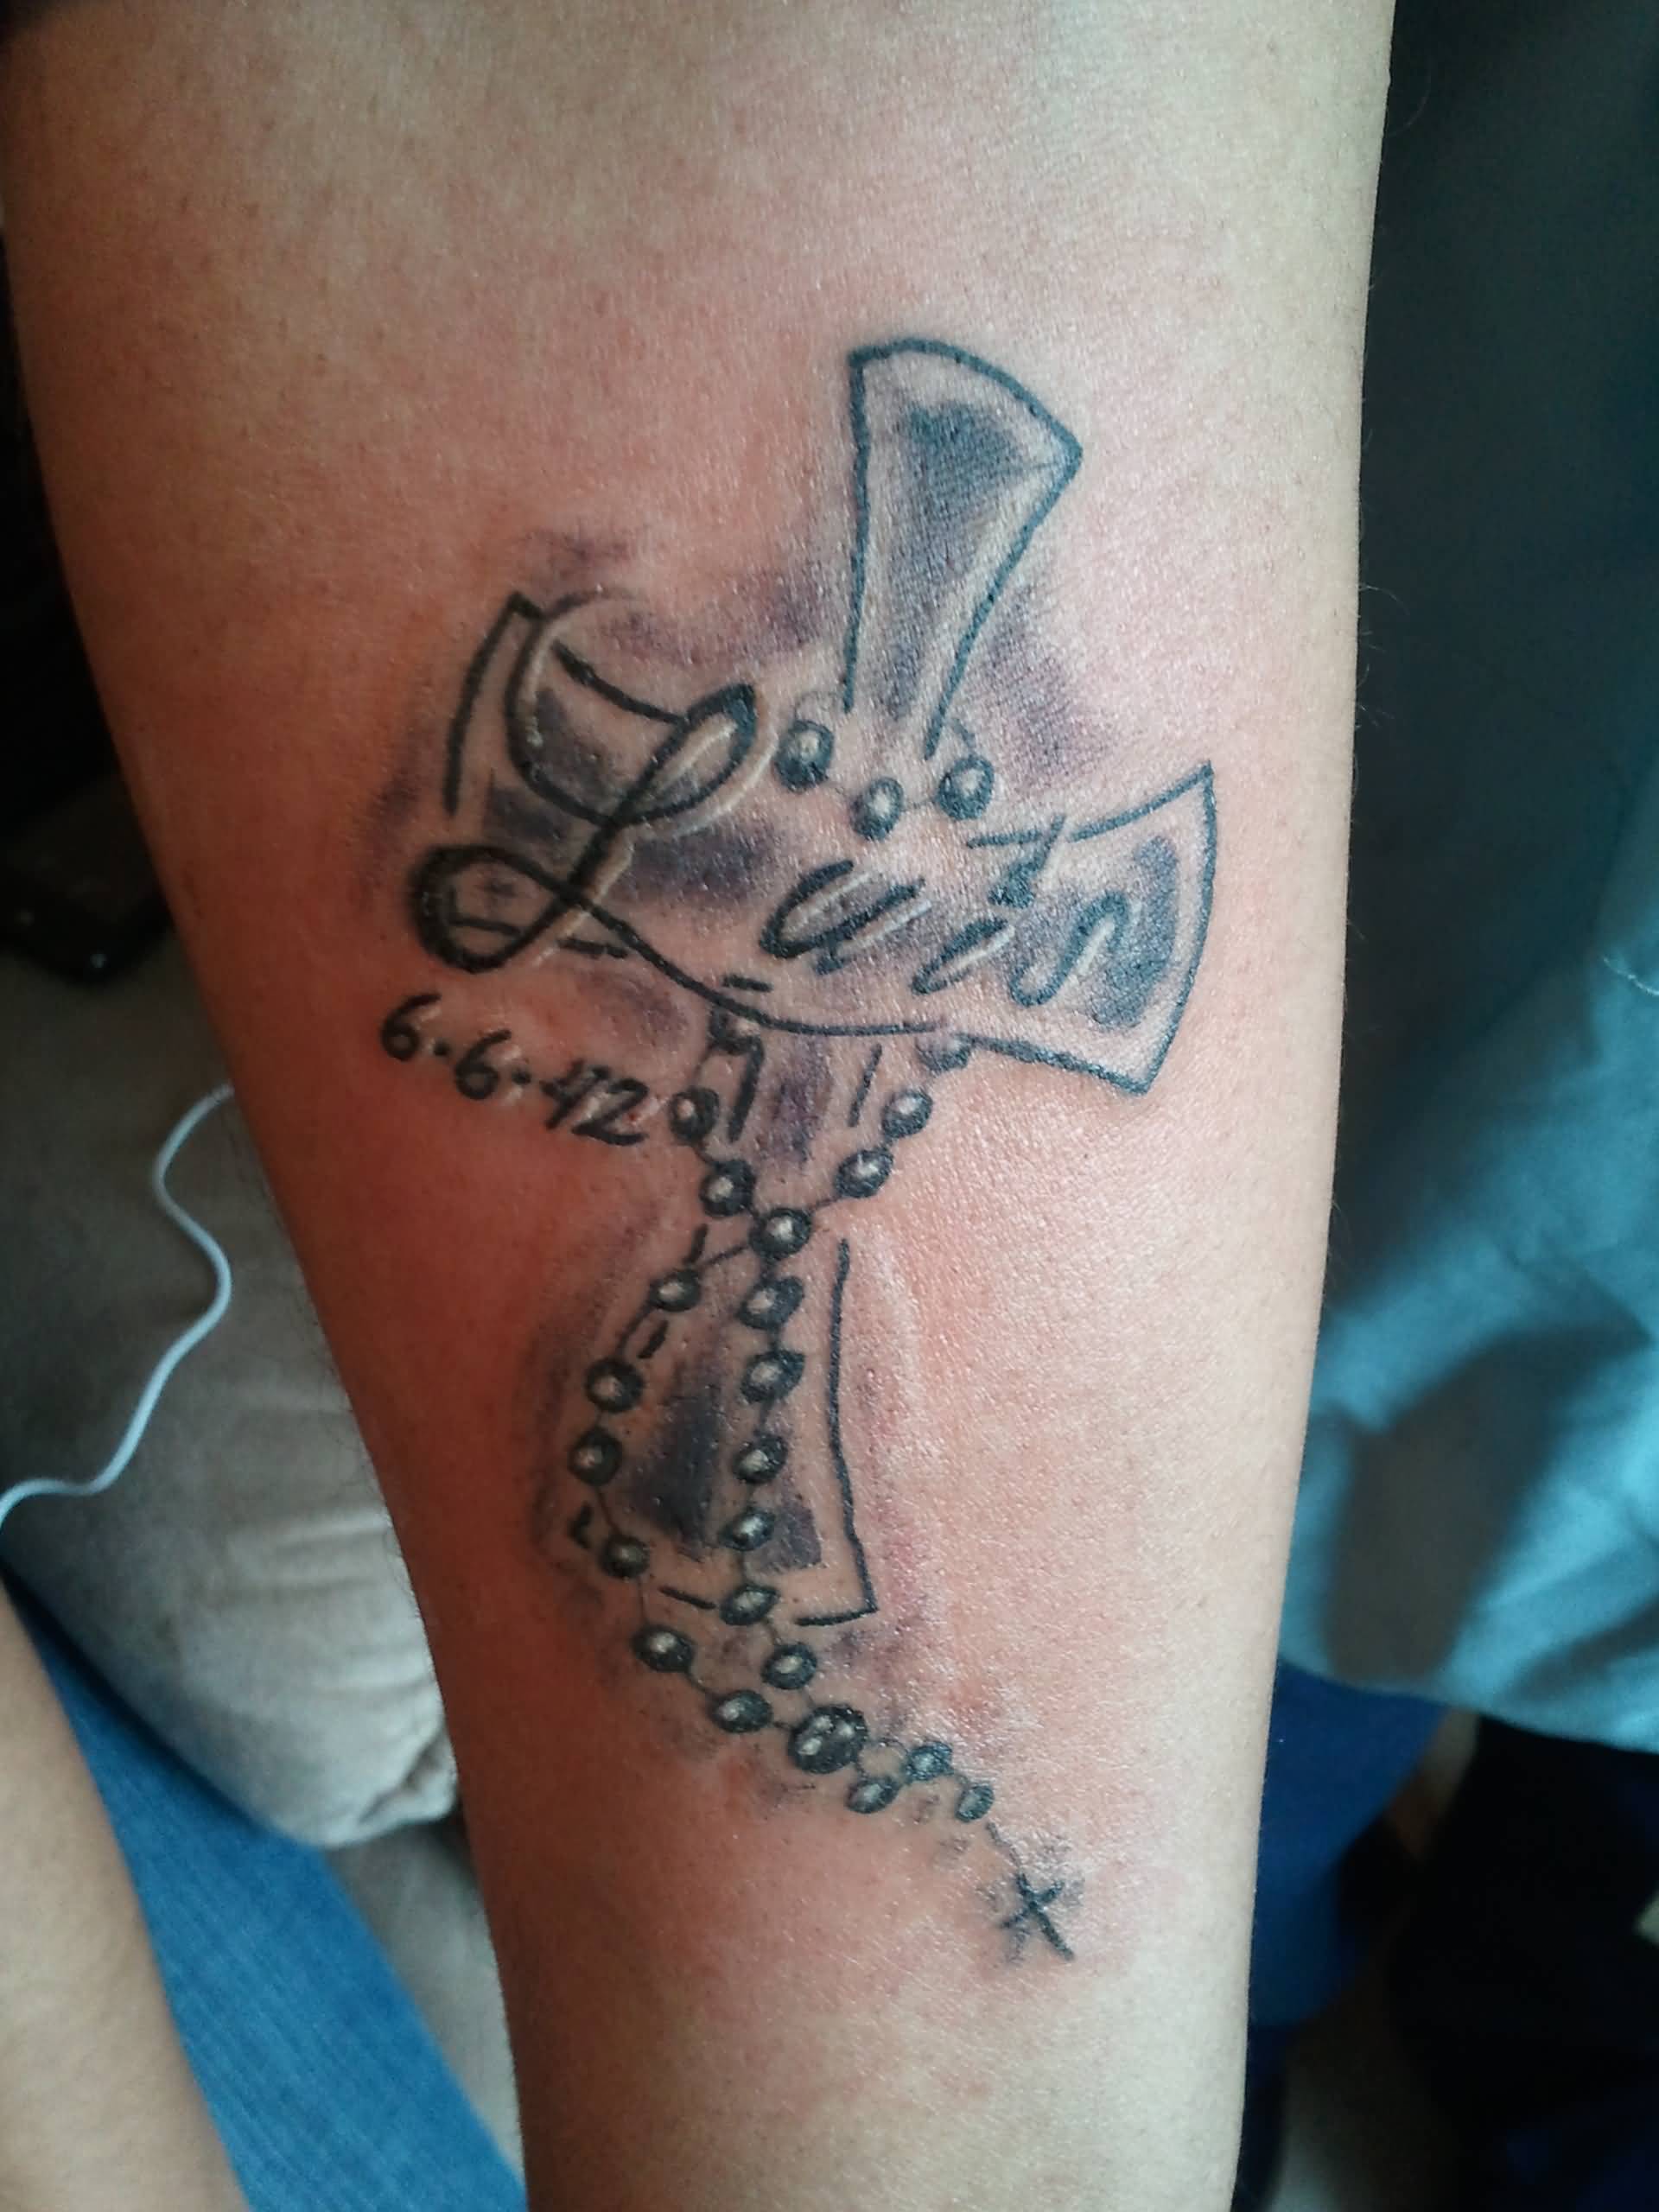 Cross Rosary Name Tattoo On Arm